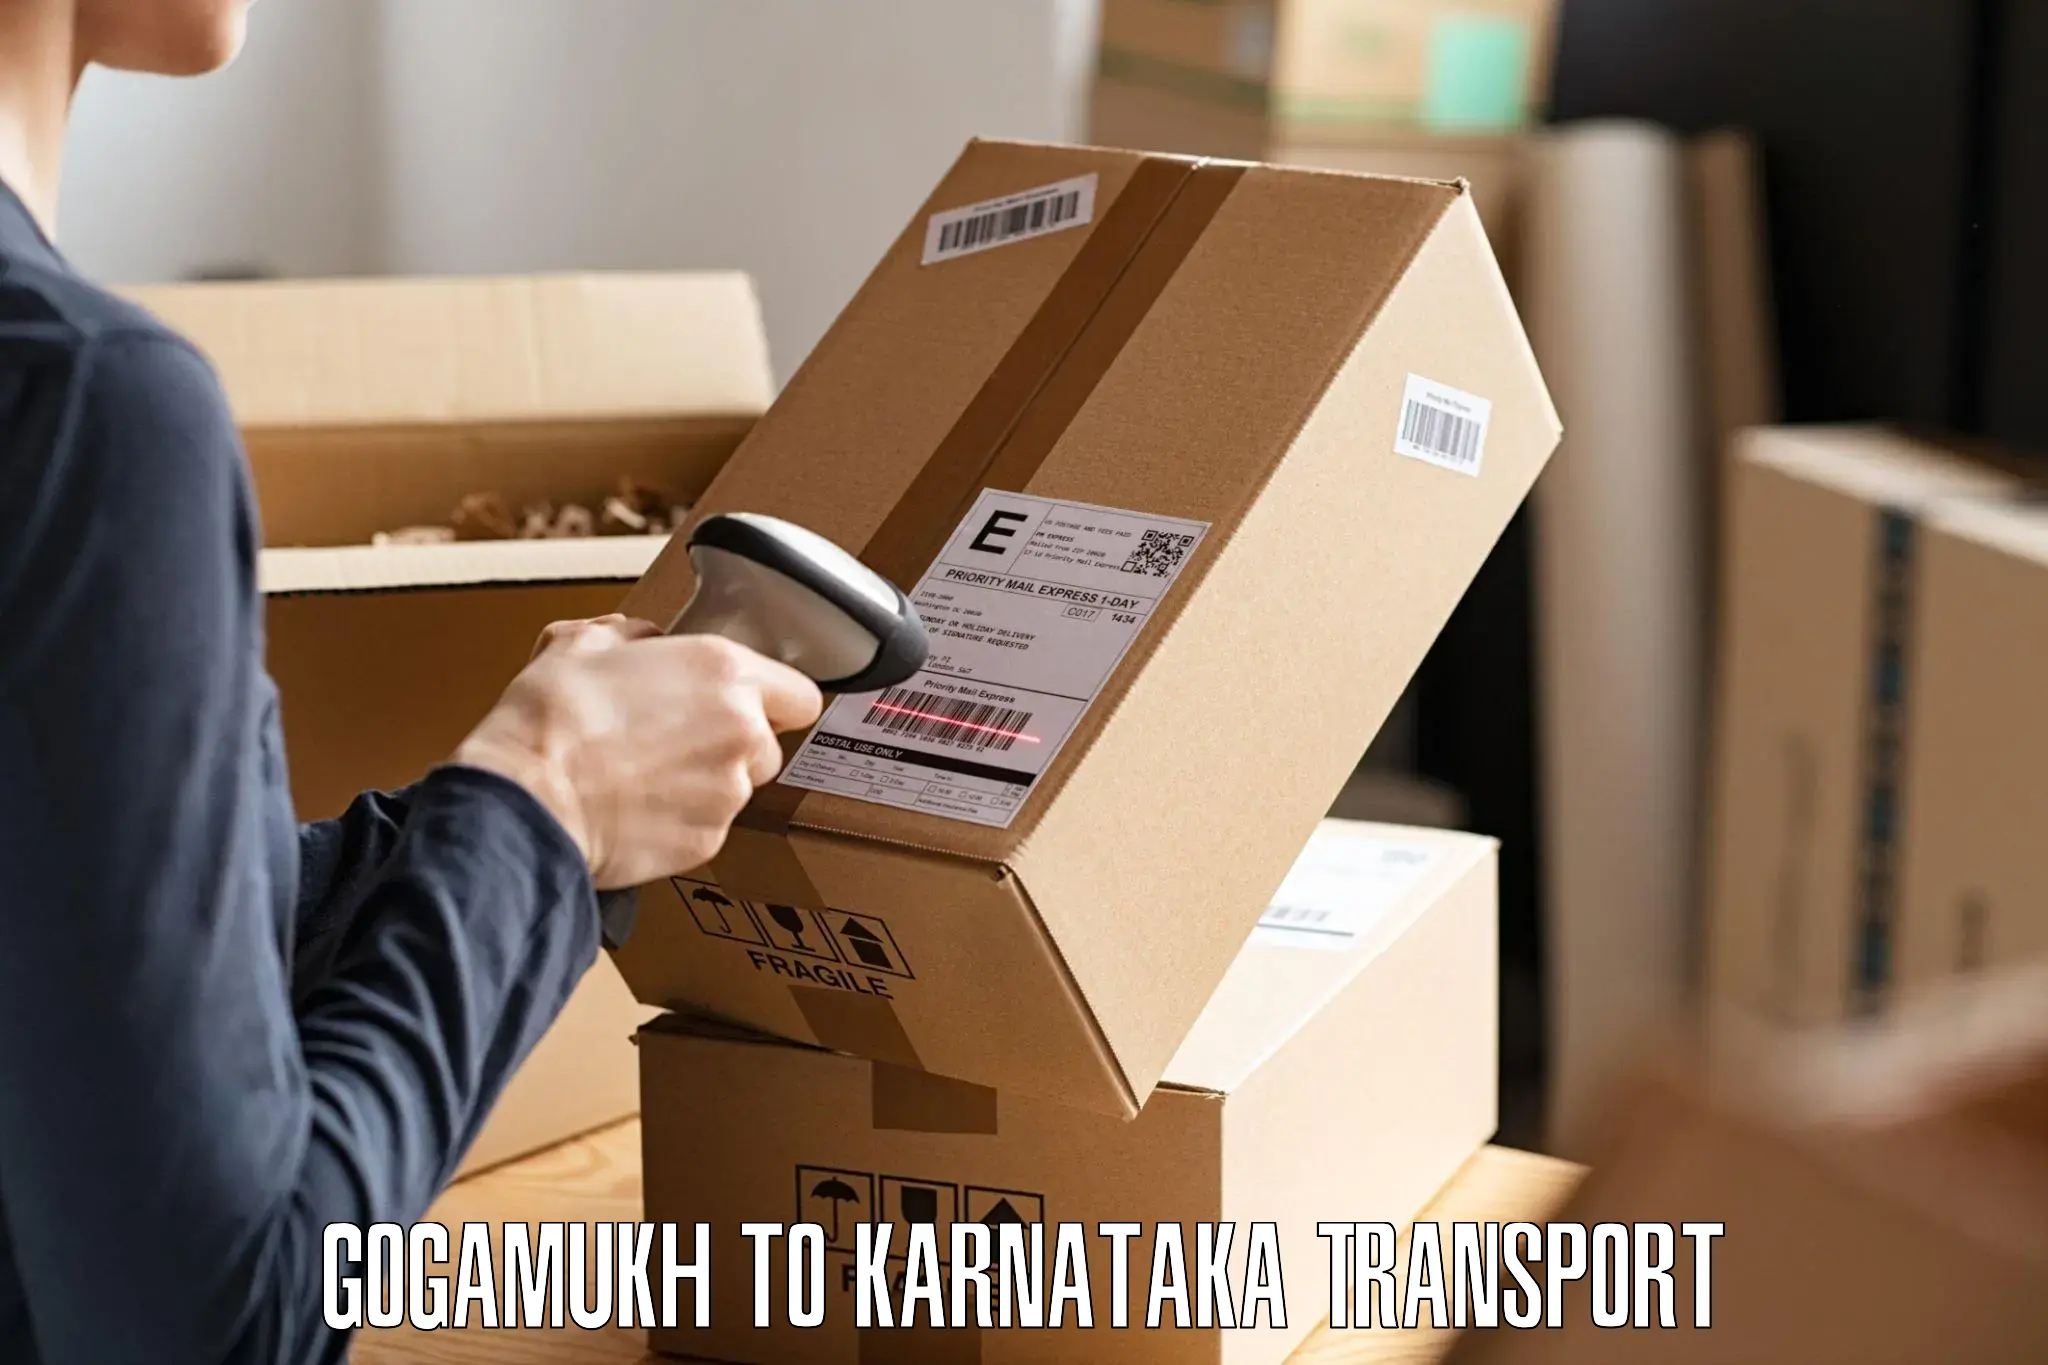 Daily transport service Gogamukh to Karnataka